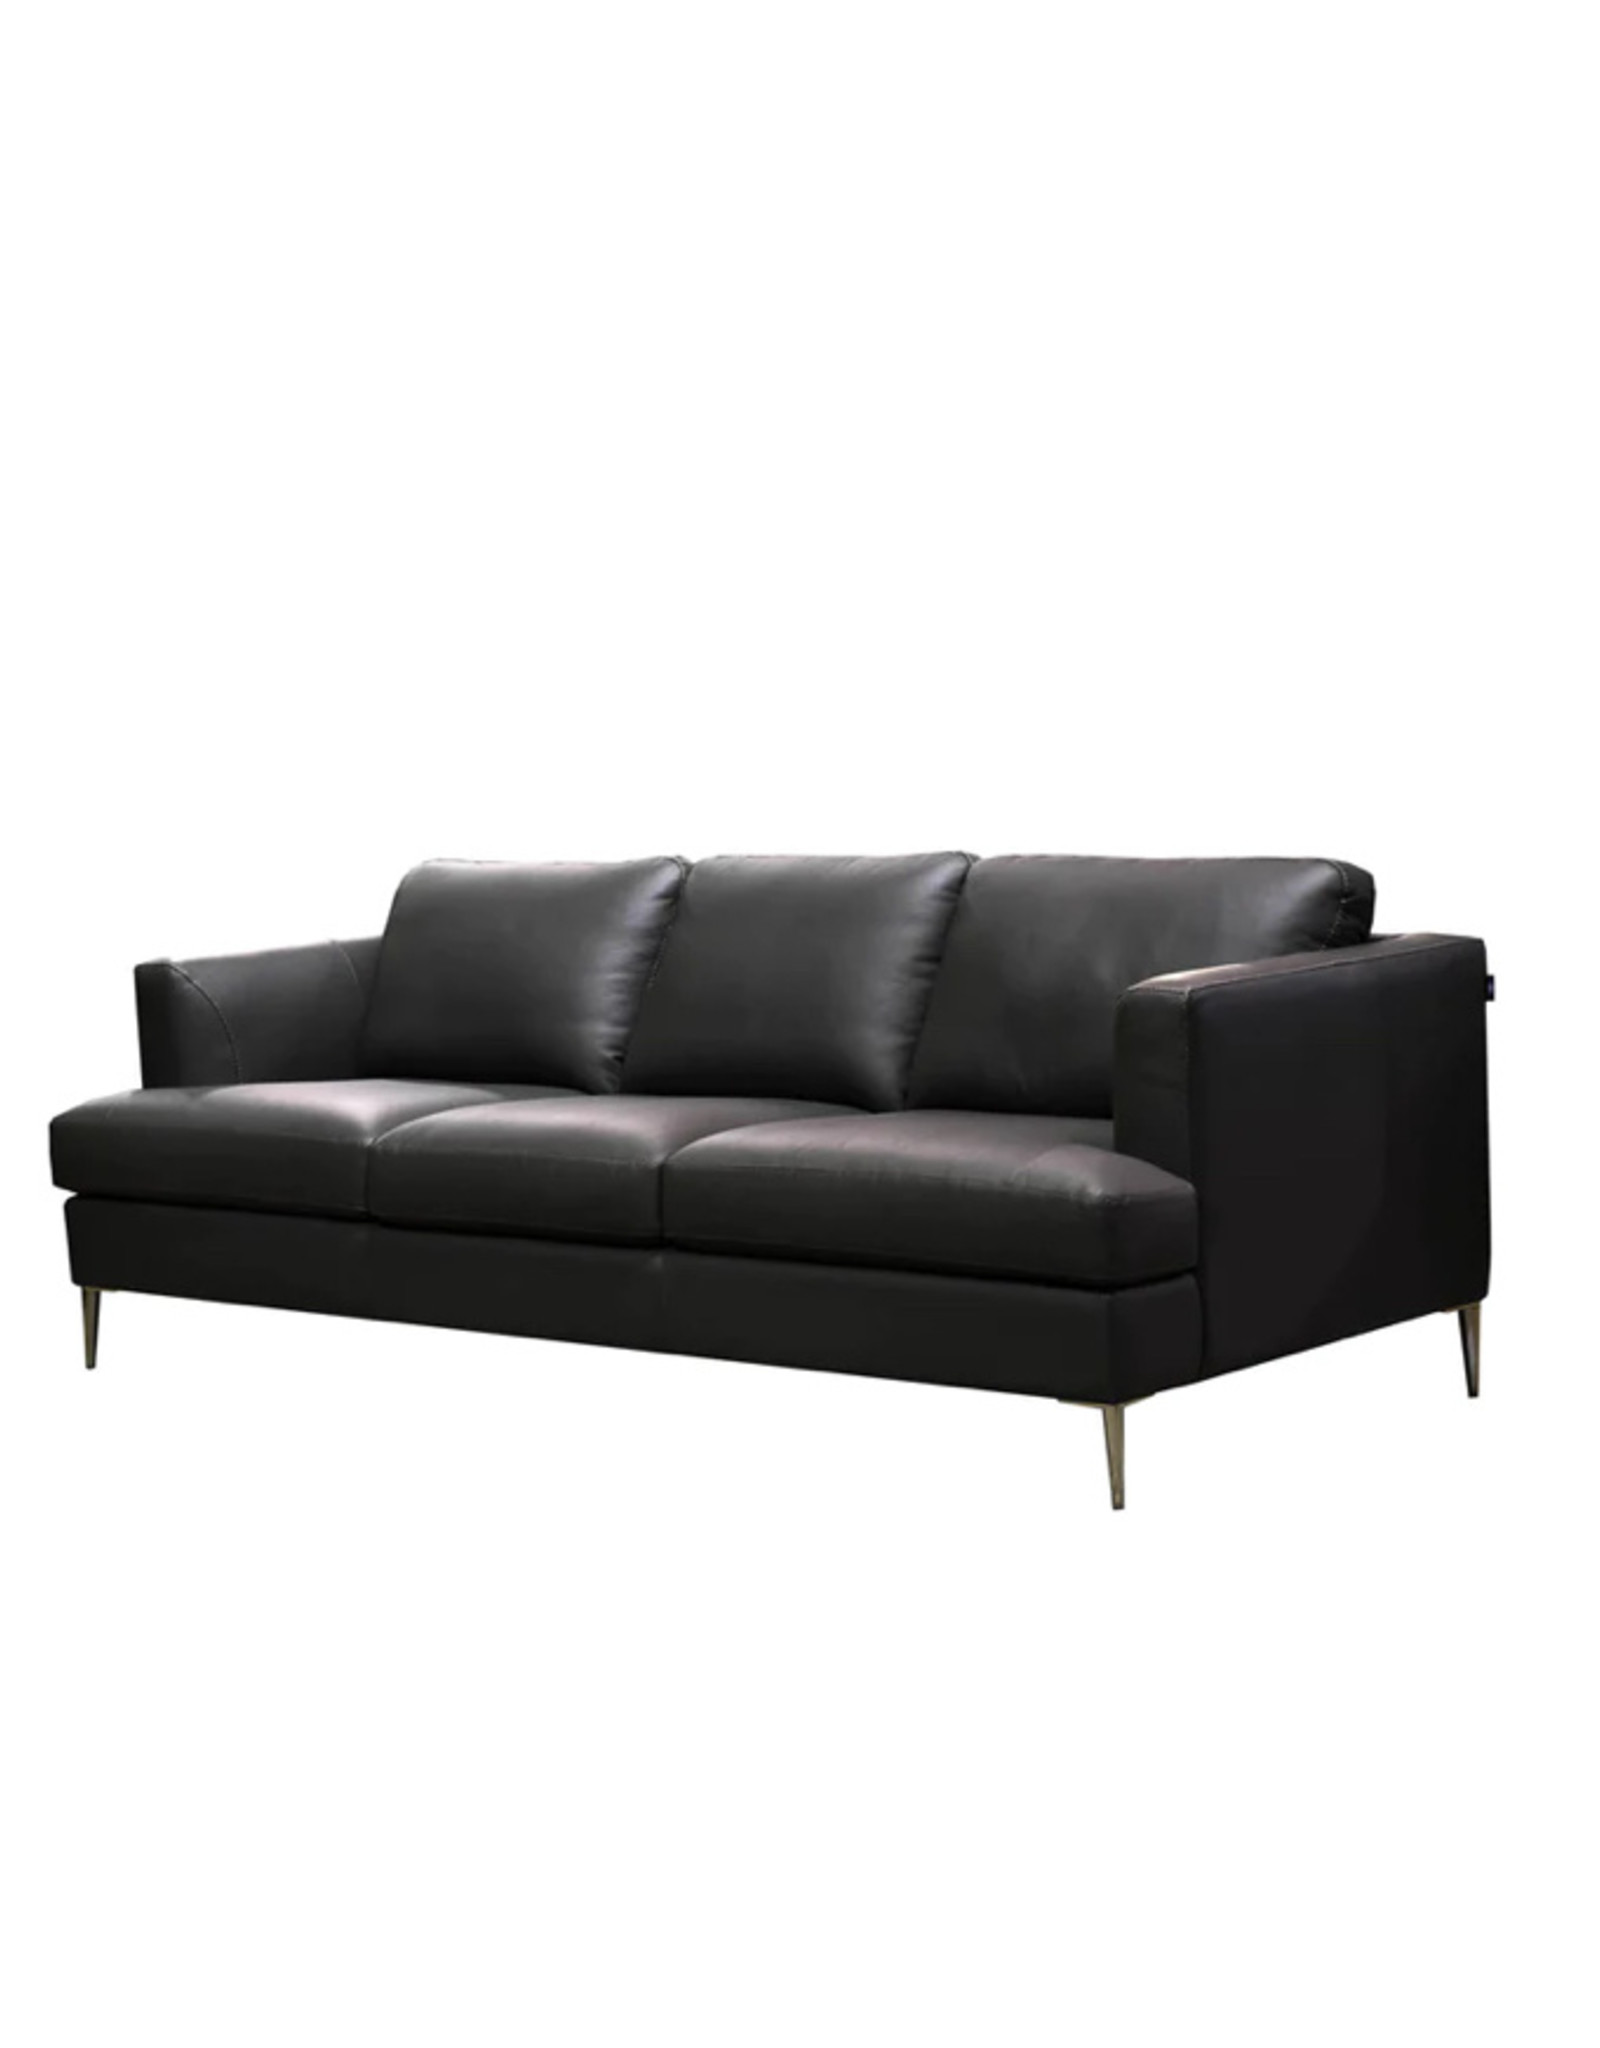 LH Imports LH Davenport Leather Sofa Black DAV001-B